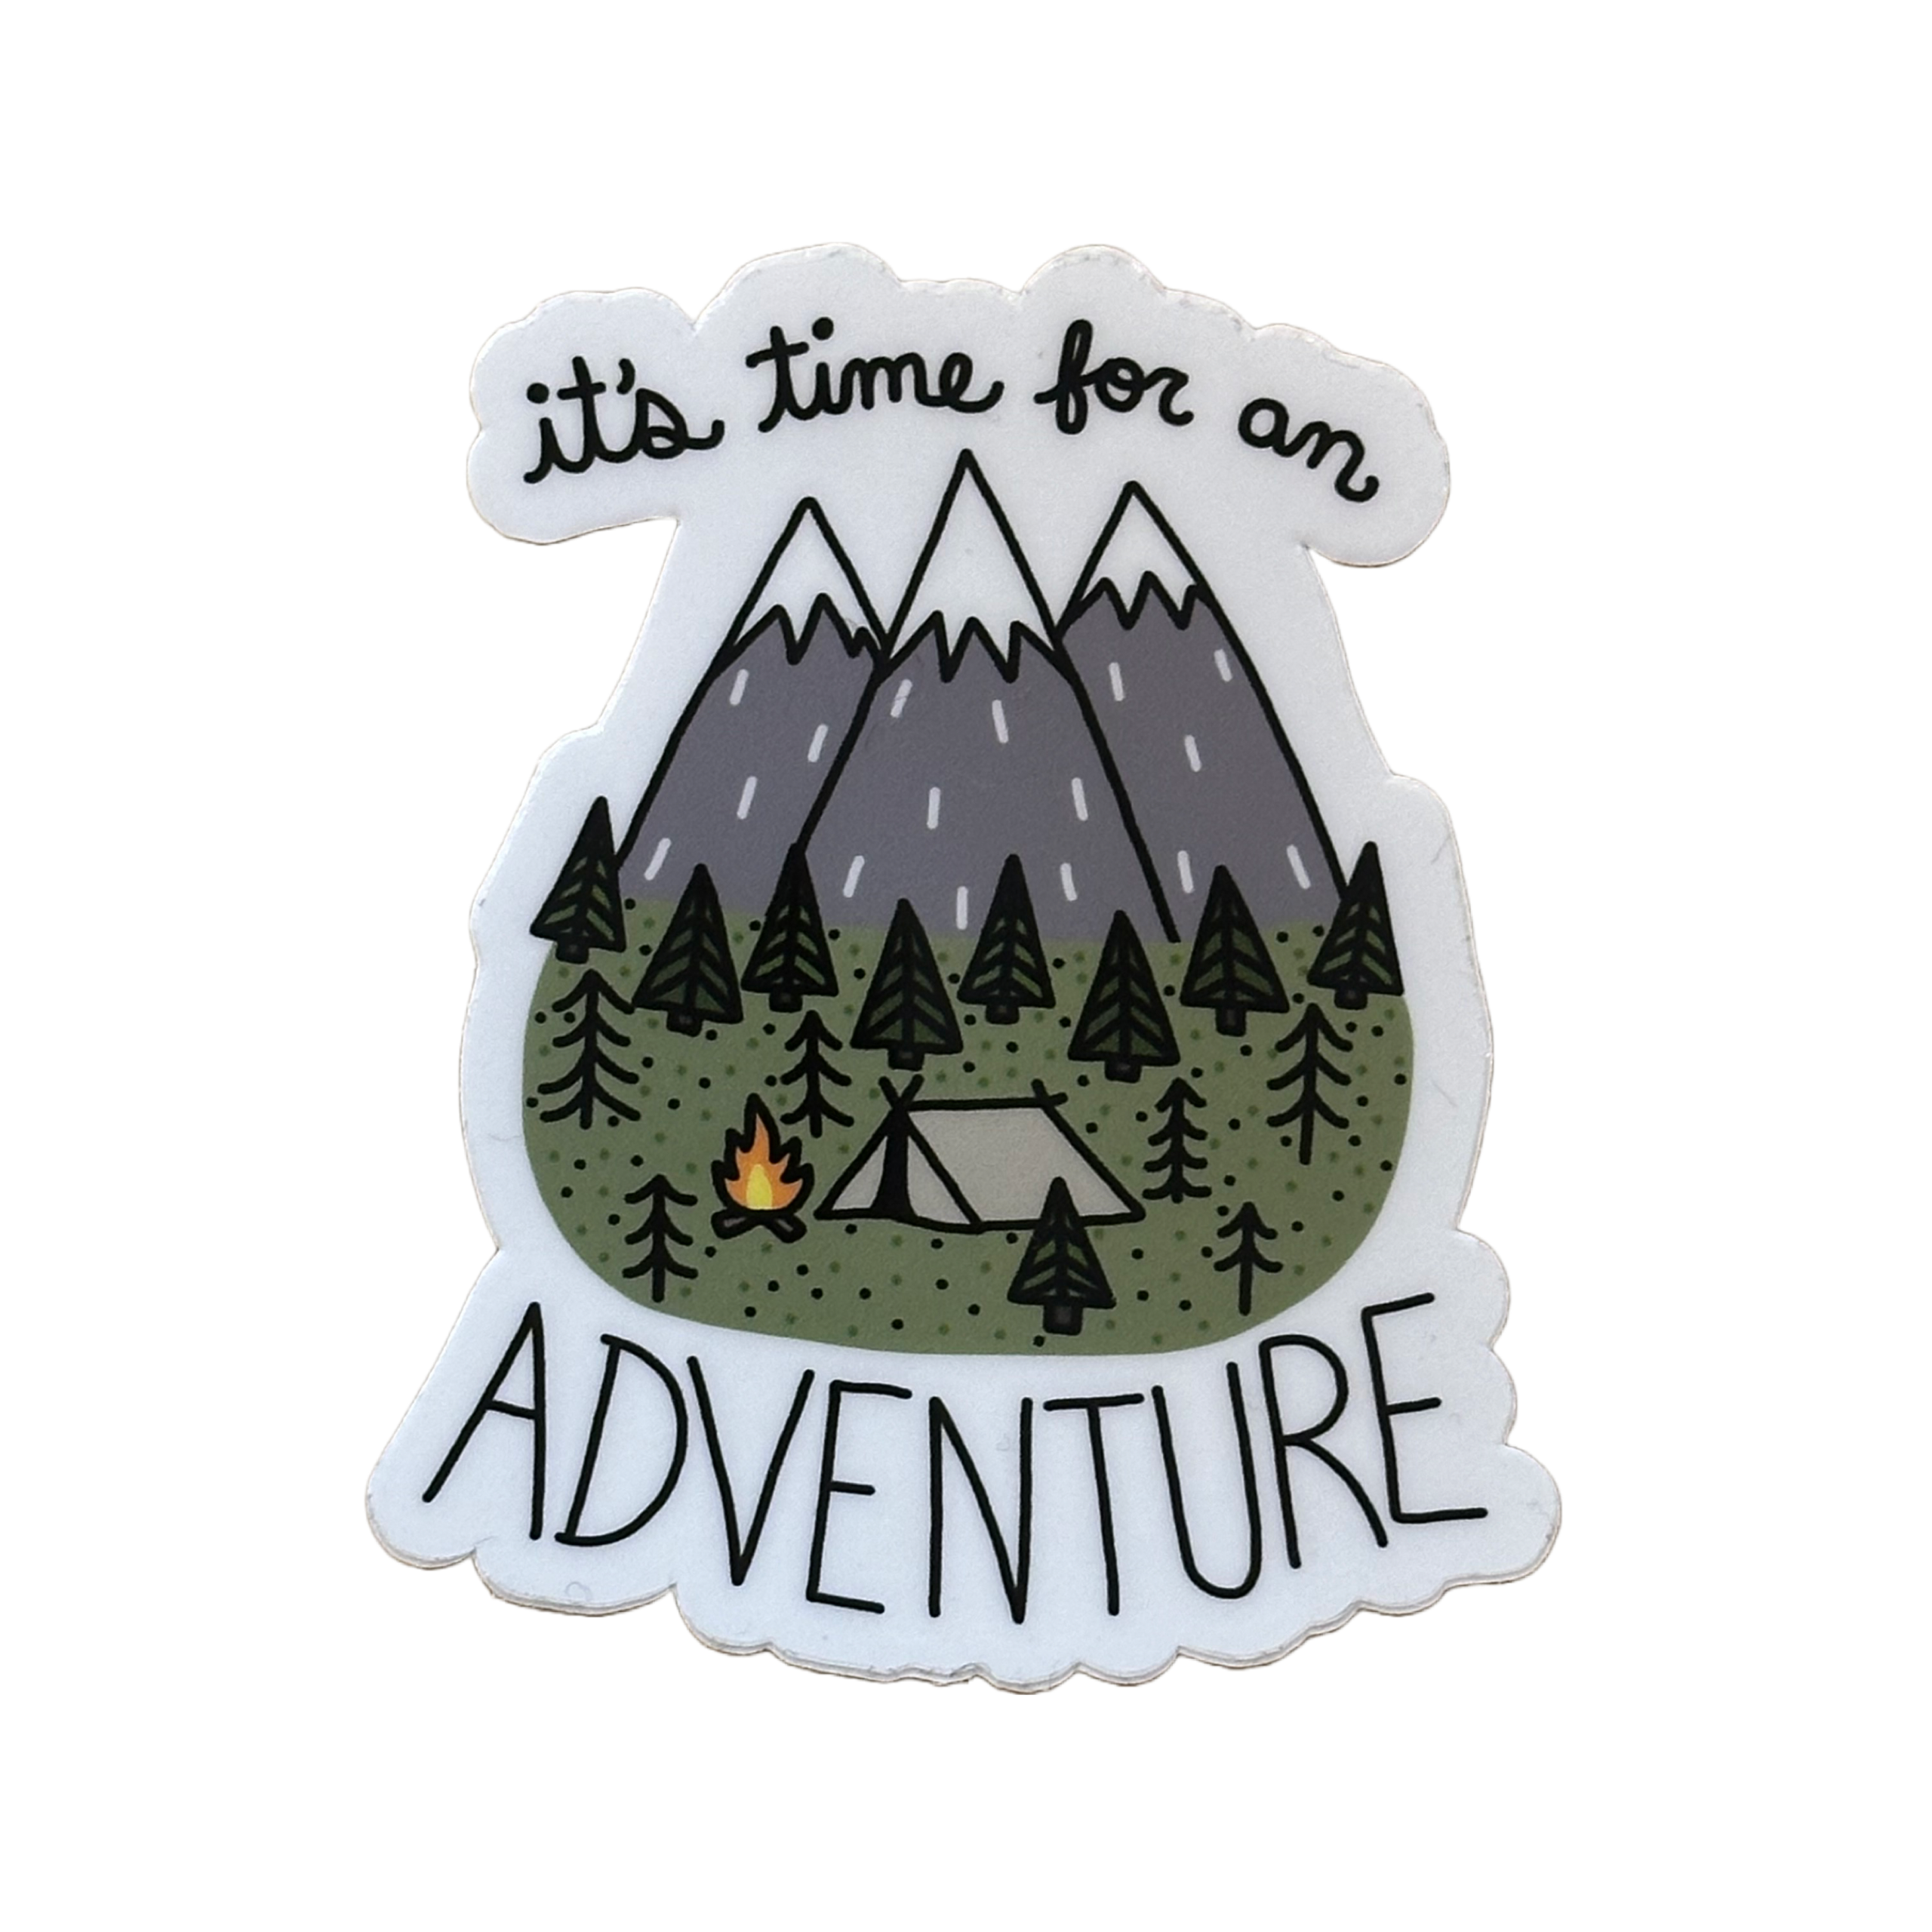 Adventure Time Sticker